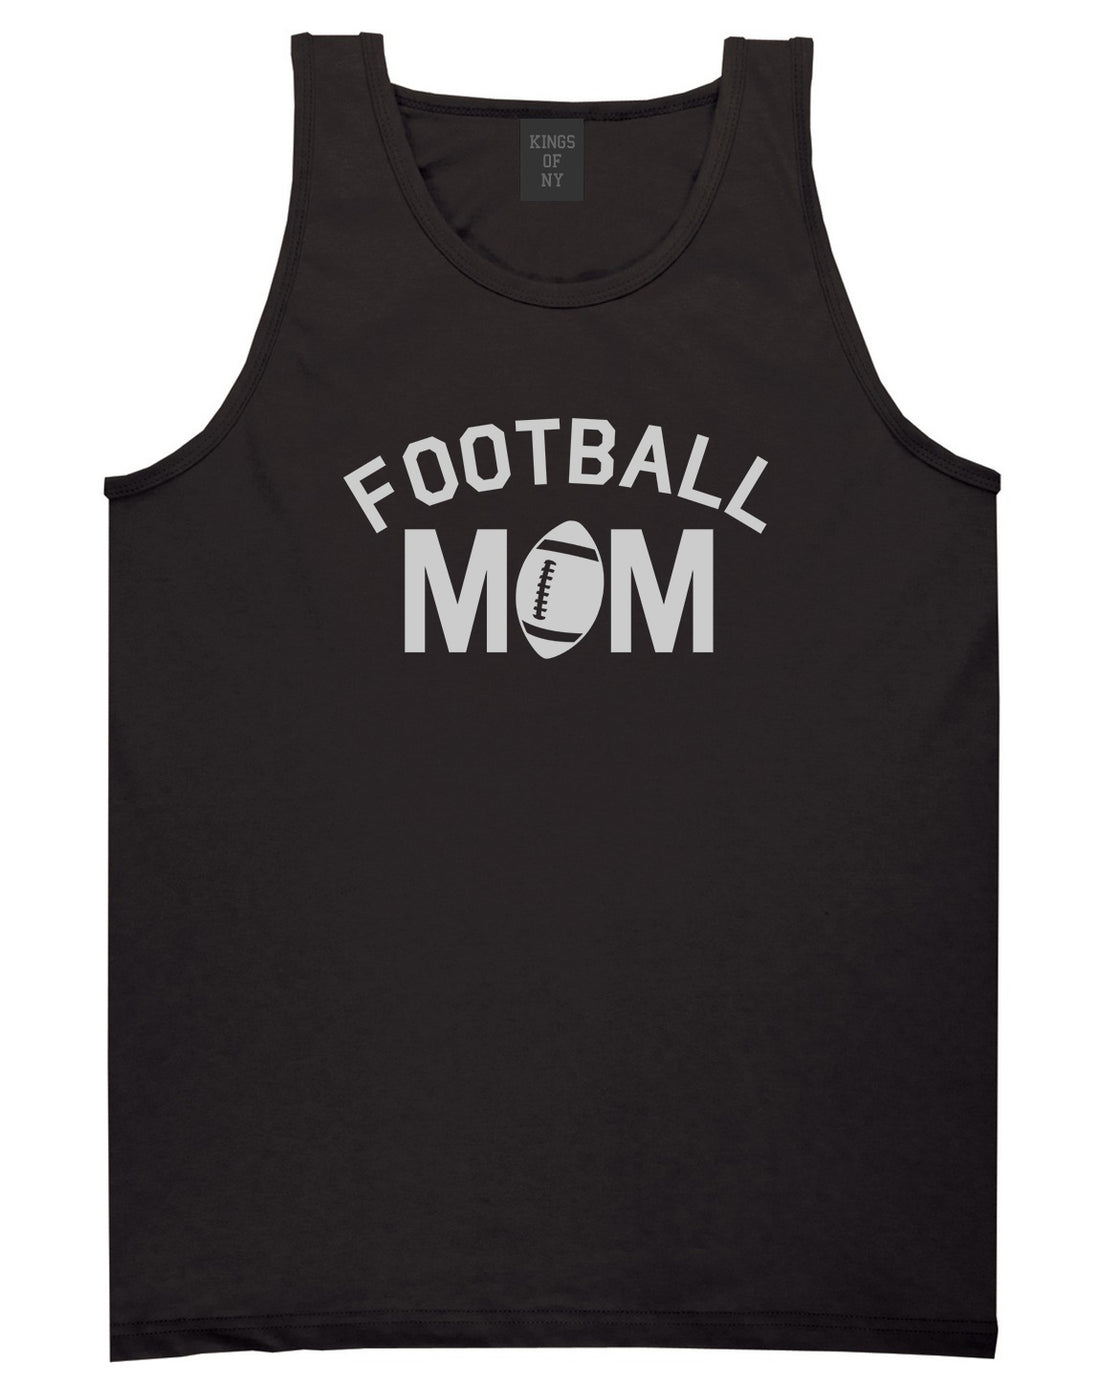 Football Mom Sports Mens Black Tank Top Shirt by KINGS OF NY